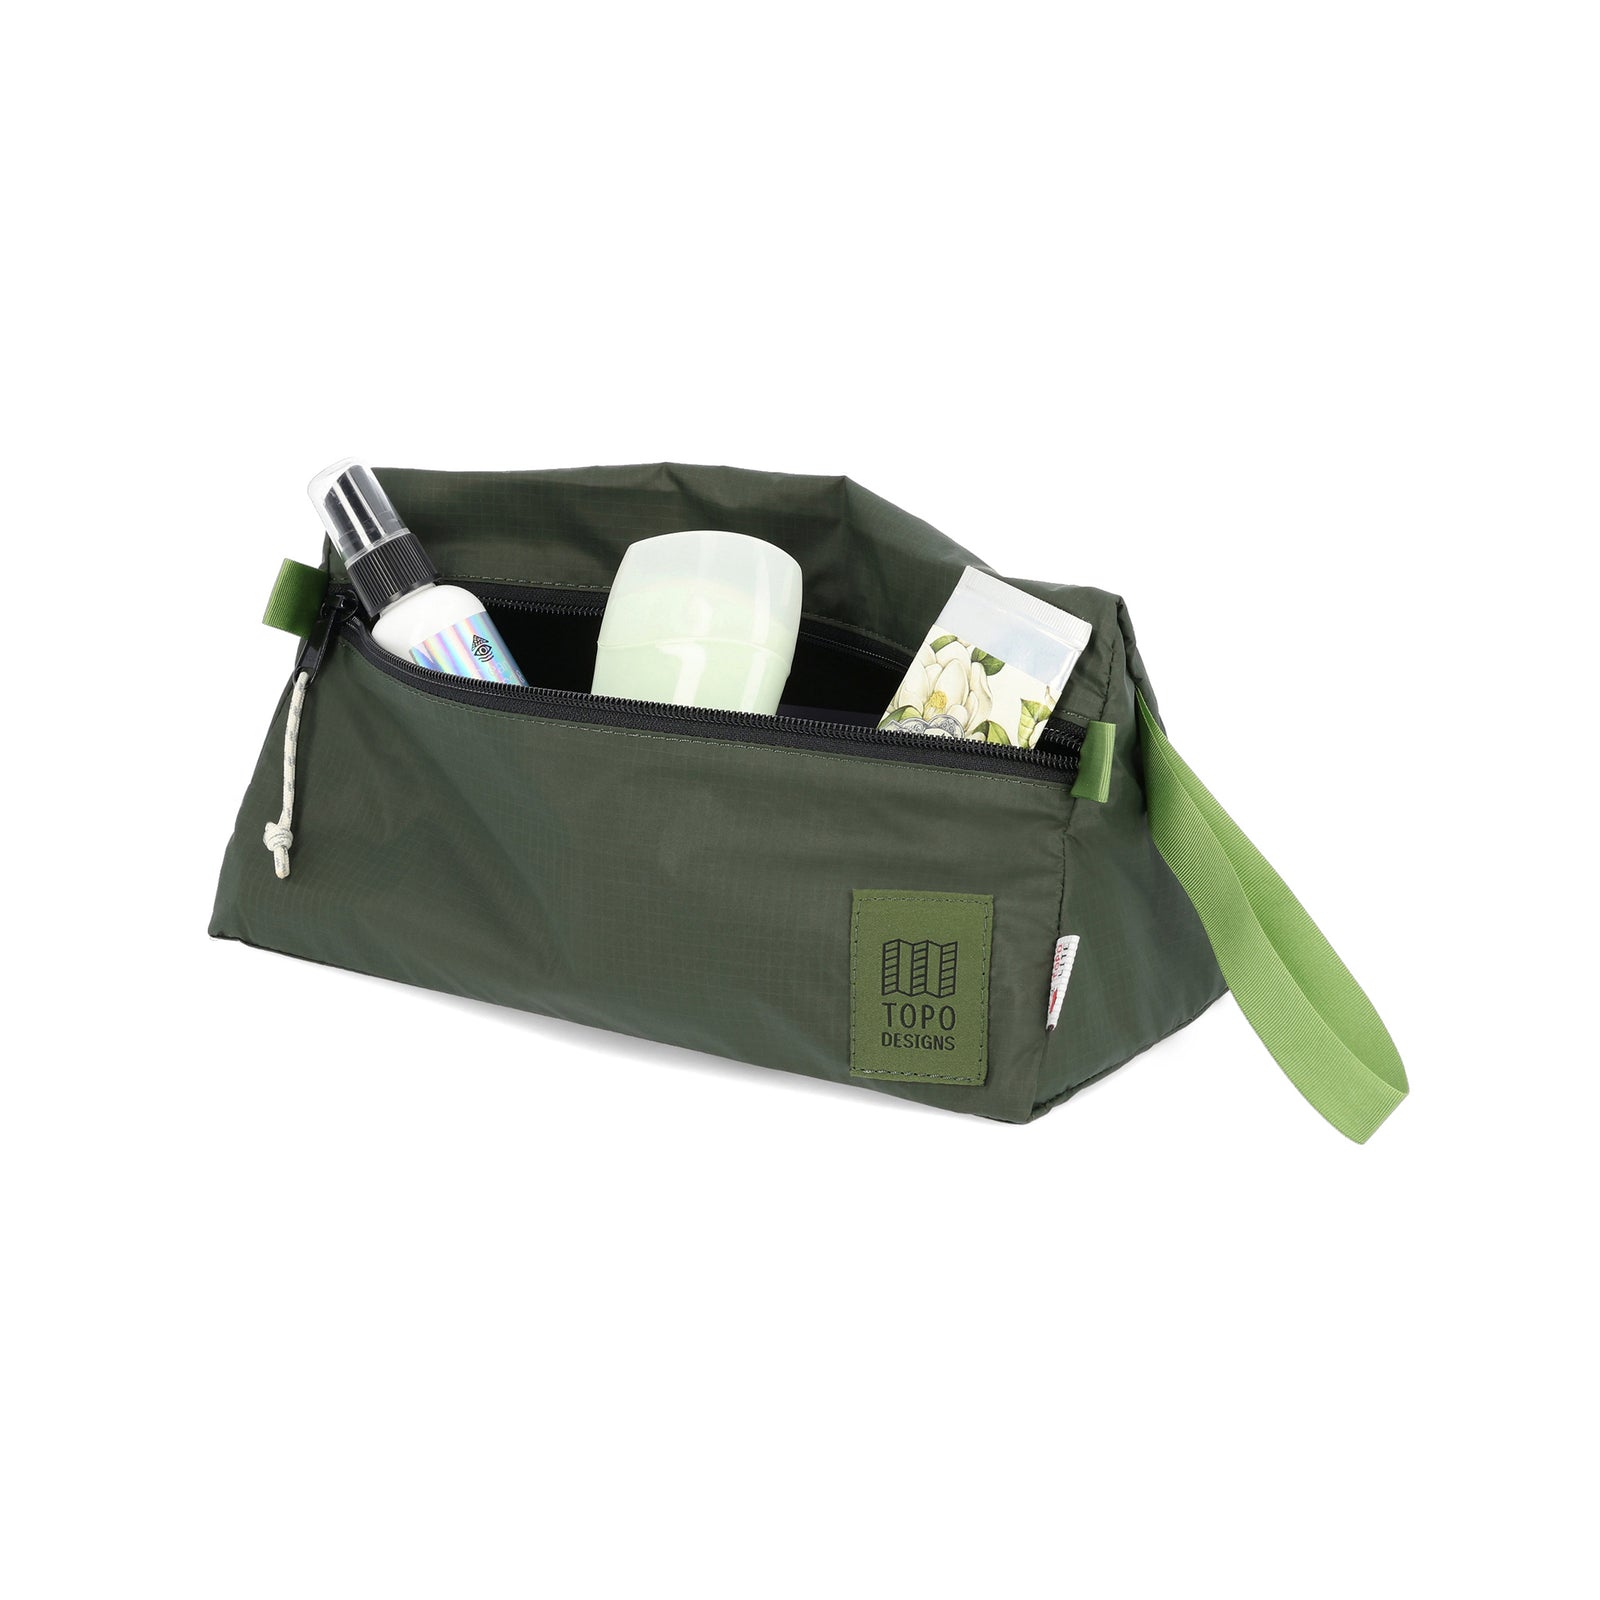 General shot of toiletries inside of Topo Designs TopoLite Dopp Kit ultralight toiletry bag for travel in "olive" green